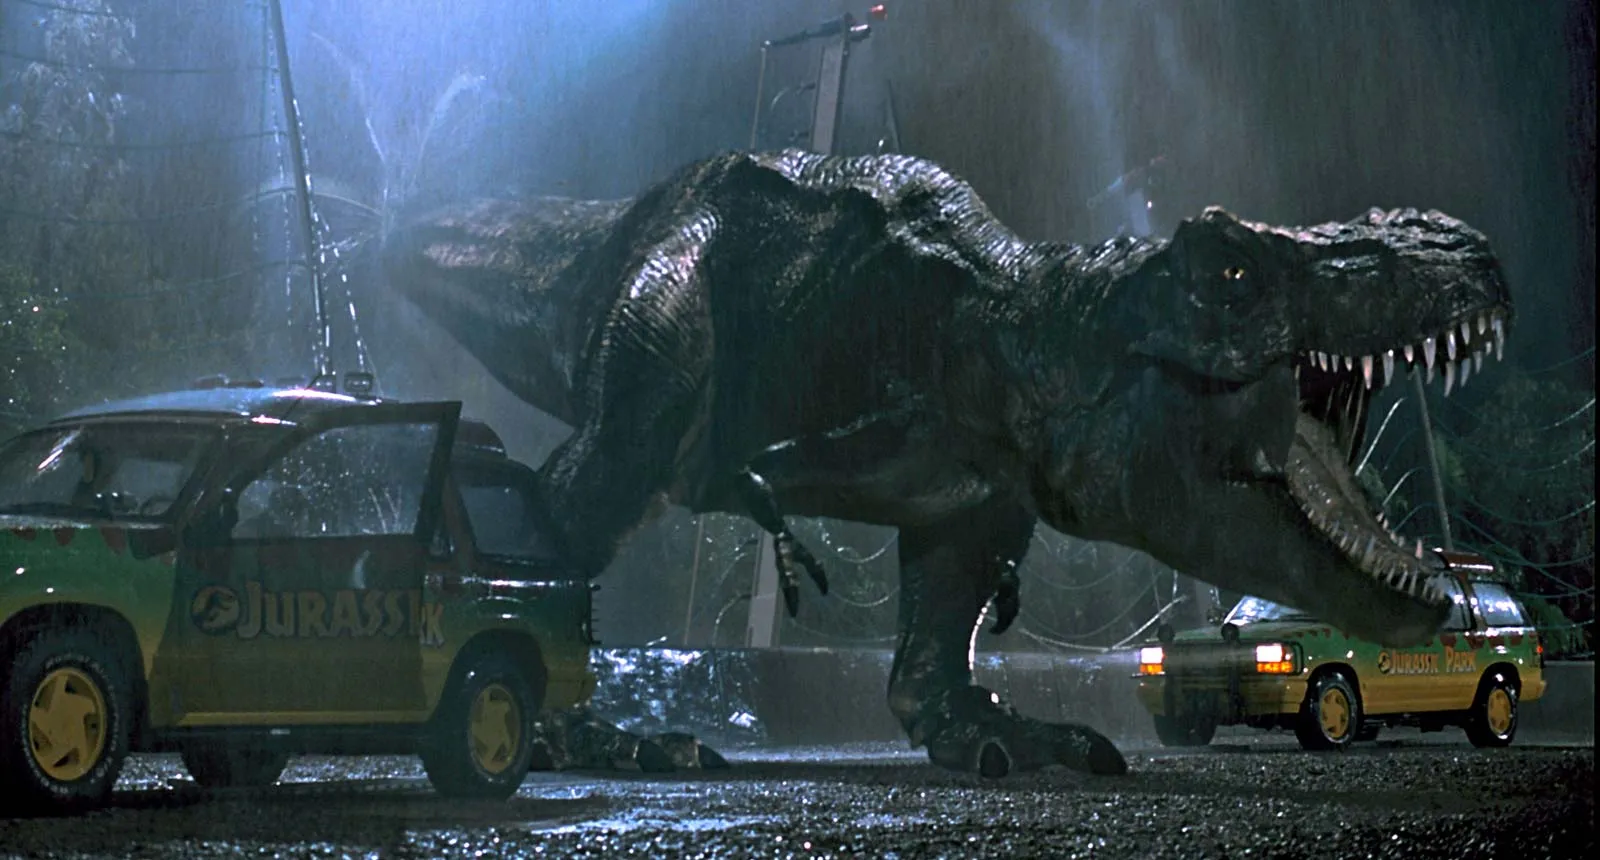 Jurassic Park 30th Anniversary Screening (Derry/Londonderry)